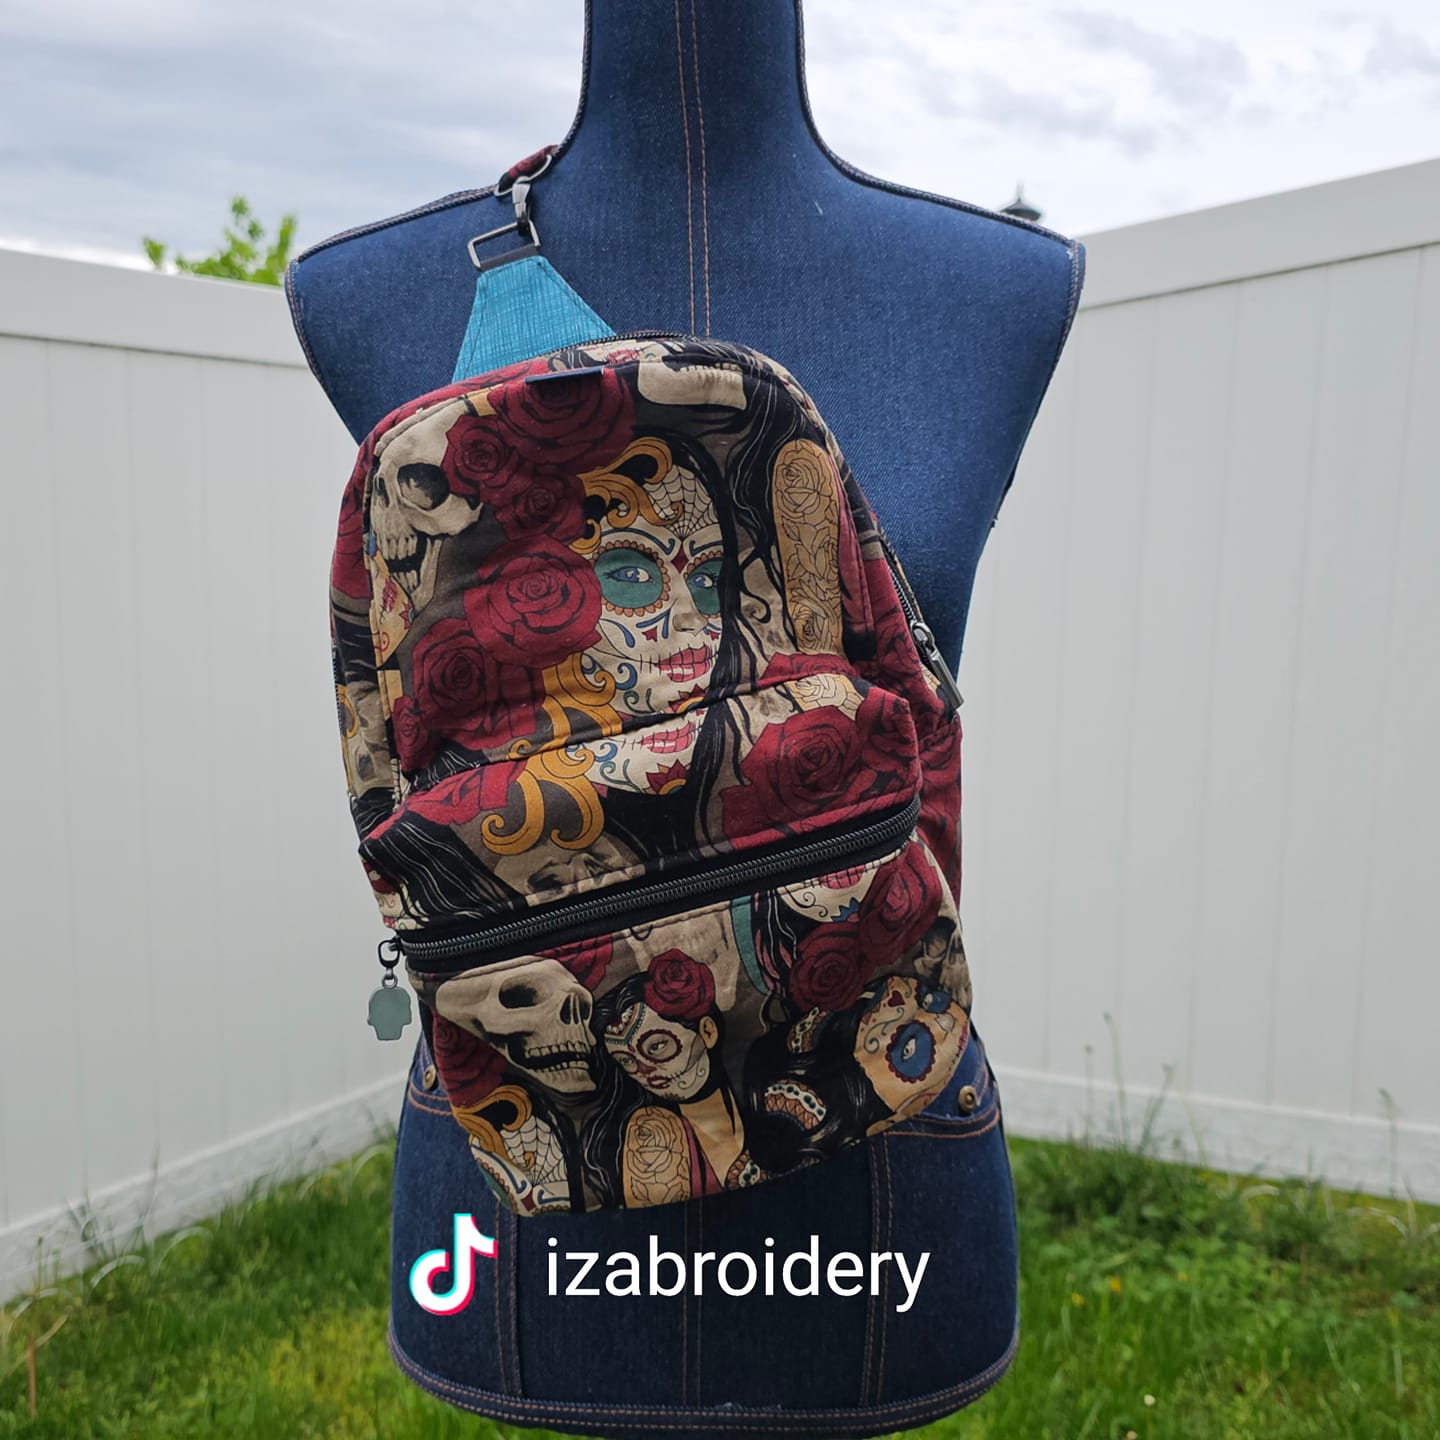 Support the tester @izabroidery on TikTok